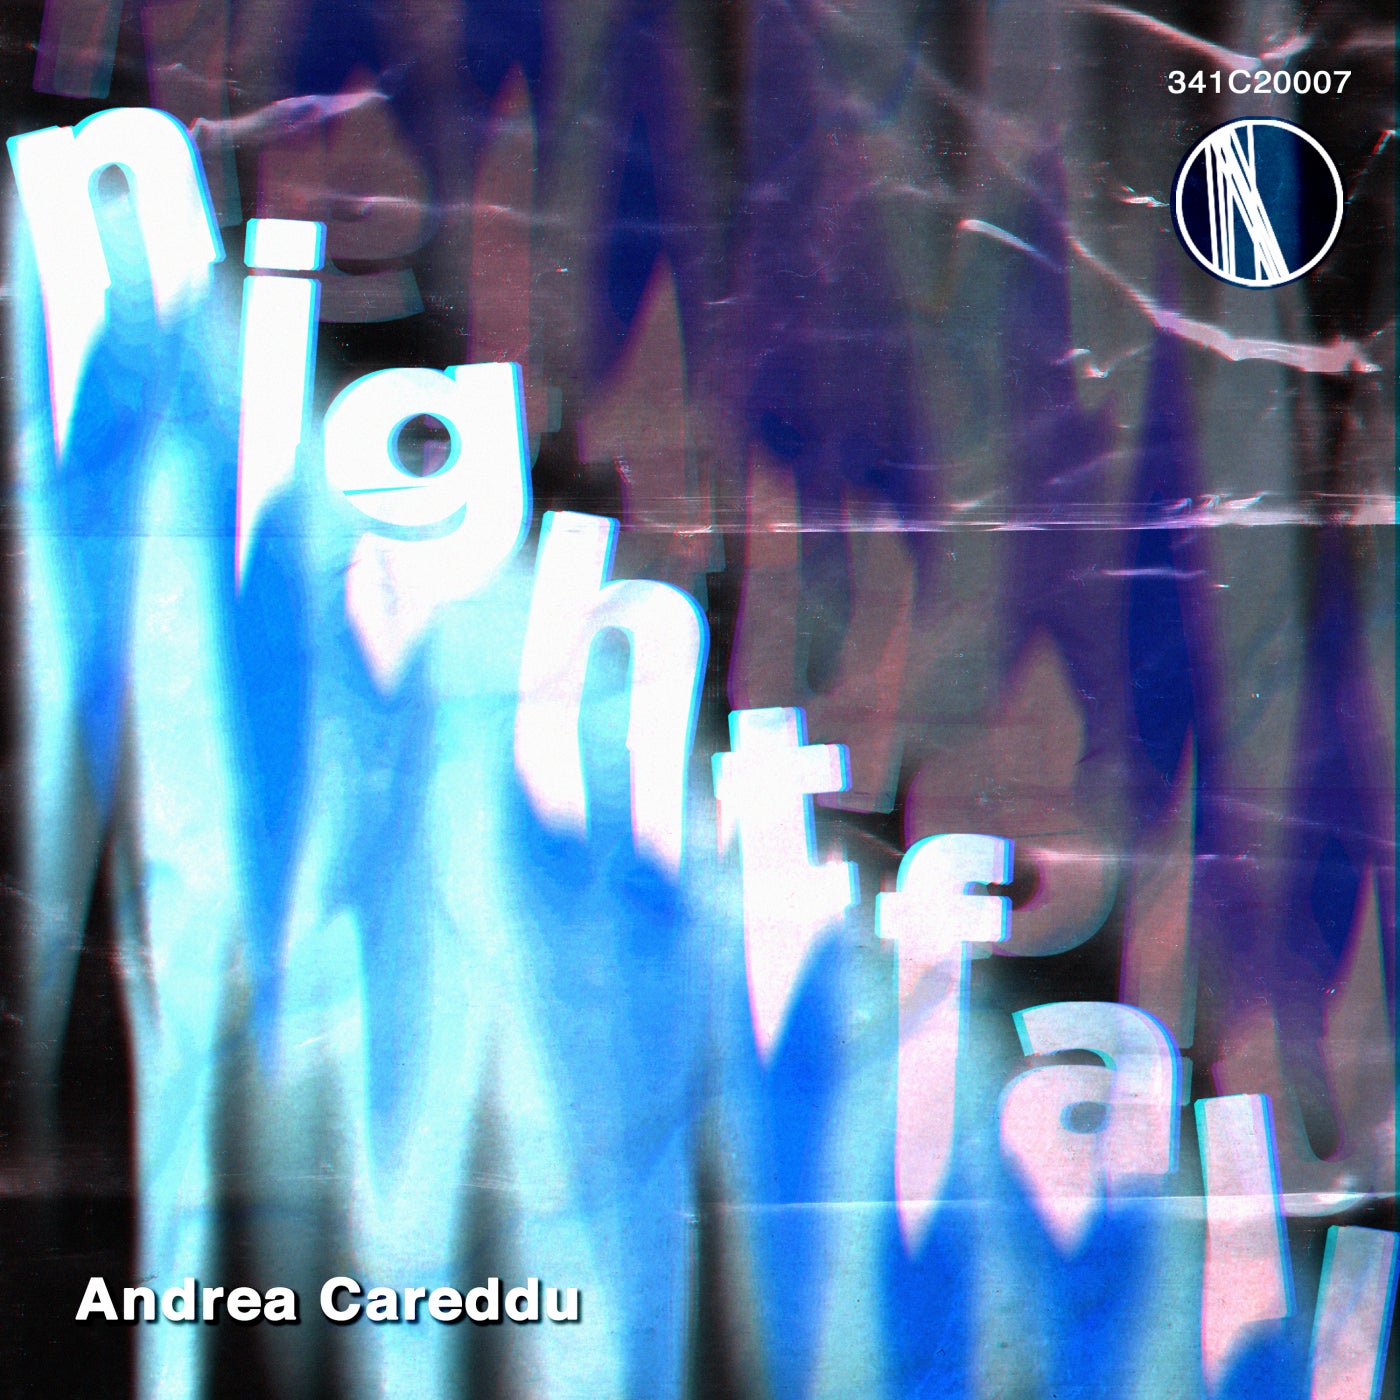 Andrea Careddu – Nightfall [341C20007]